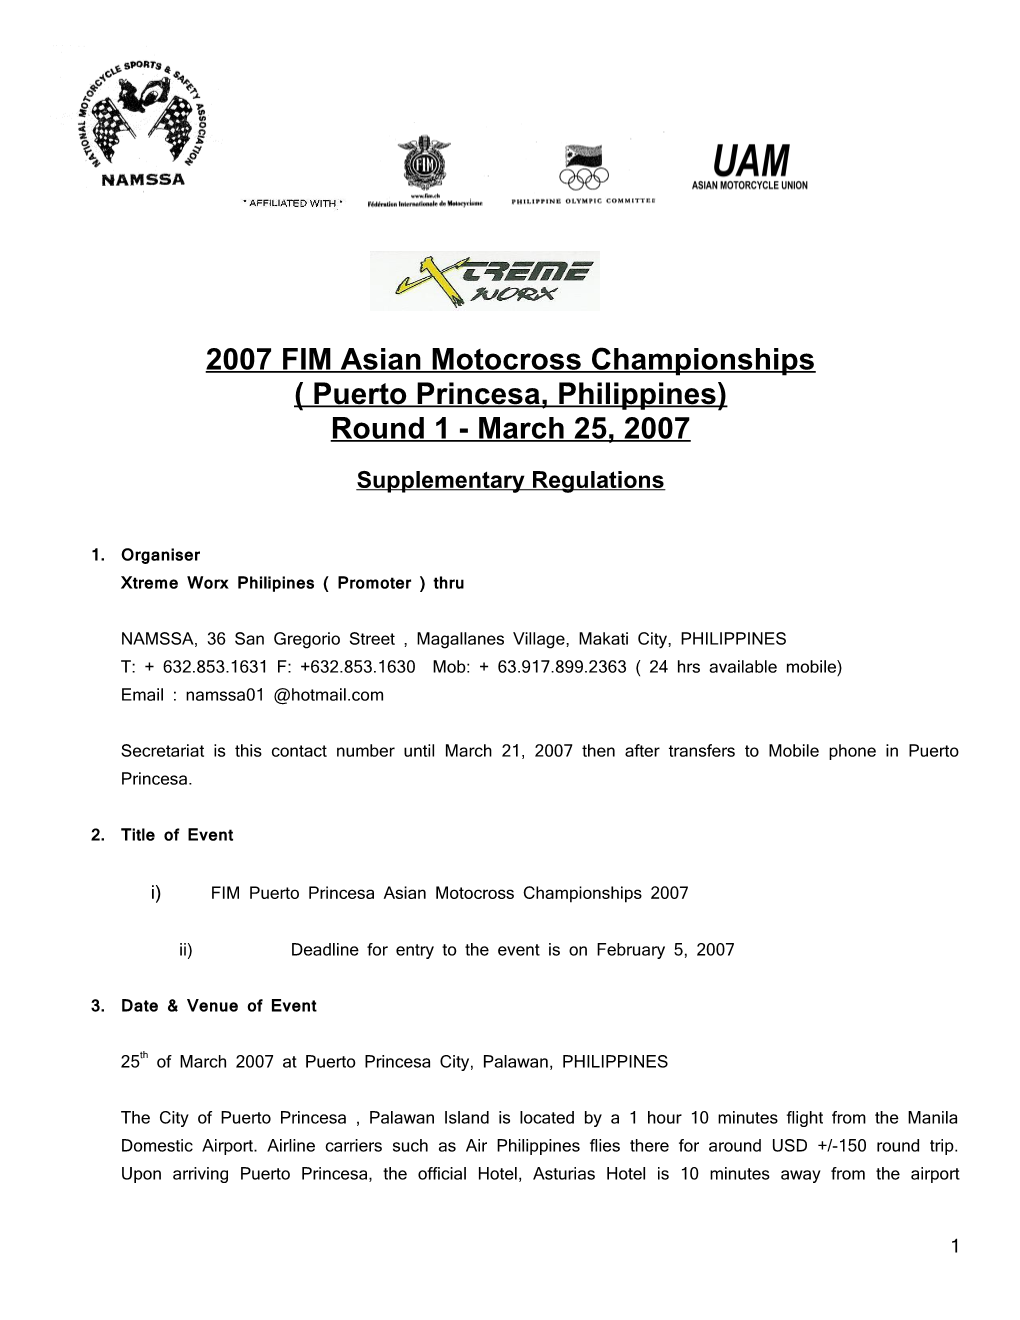 FIM Asian Supercross Championship (Singapore) 2003